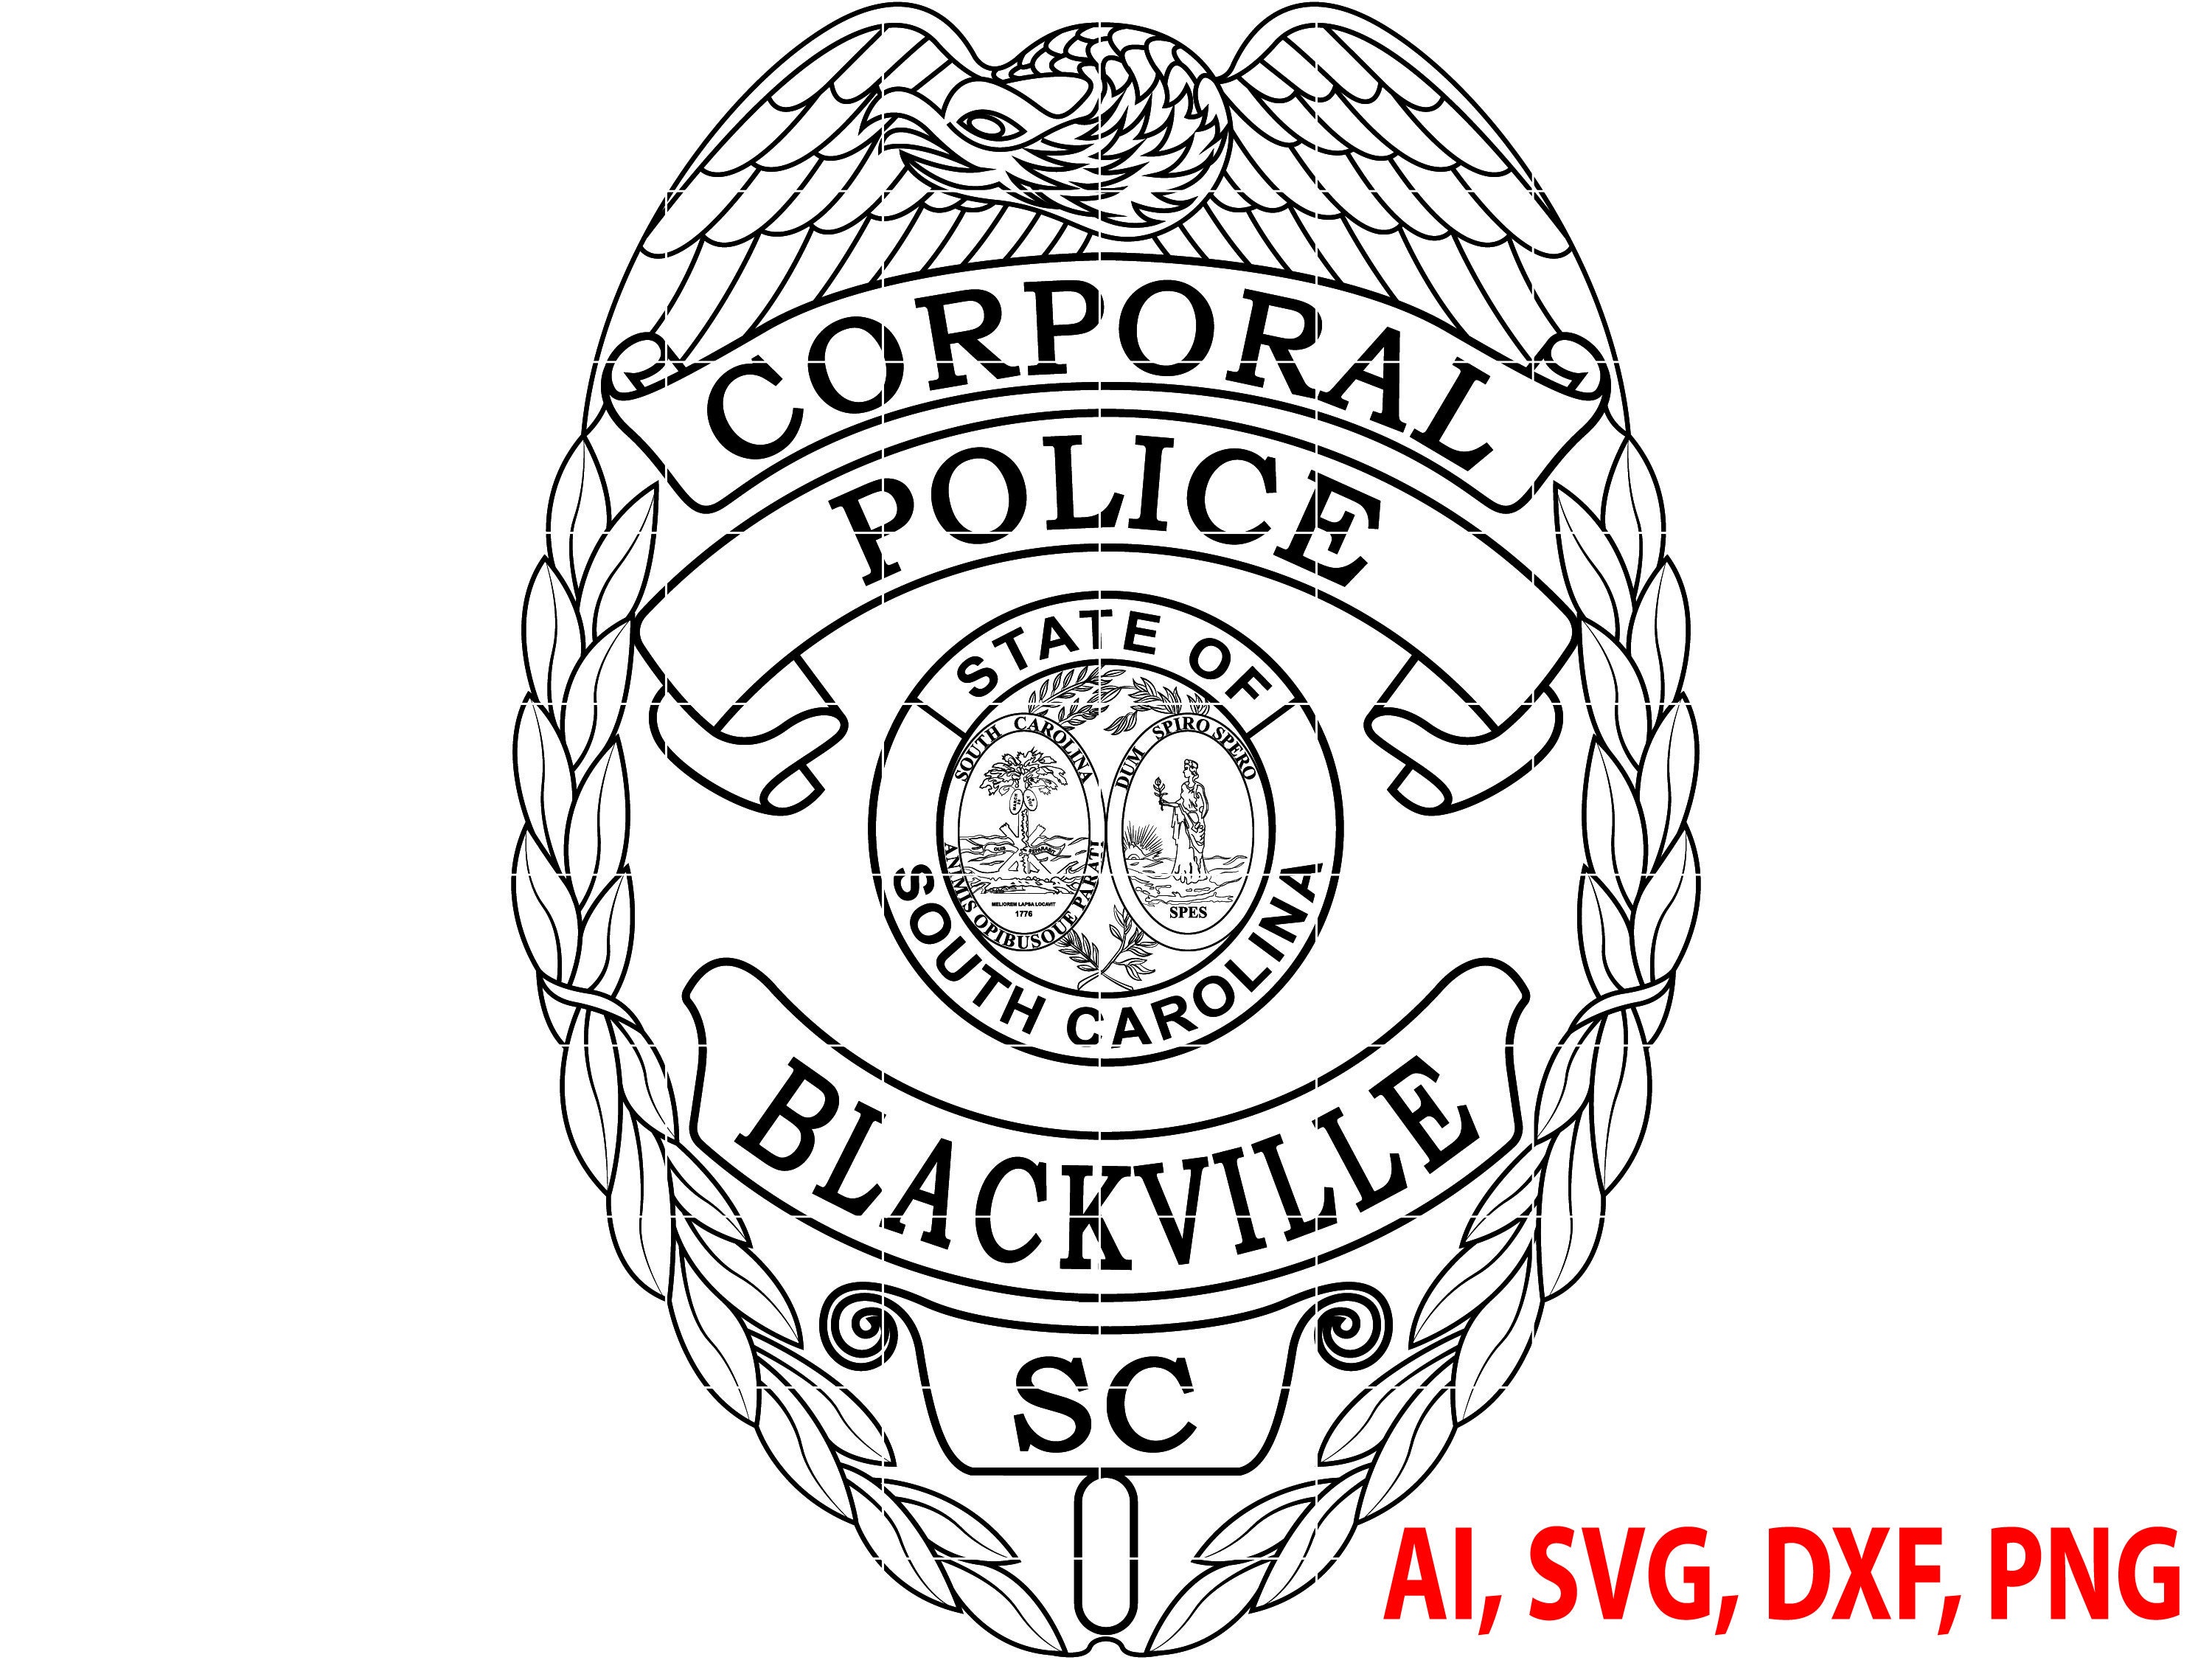 Insigne de police, Insigne de caporal de police de Blackville en